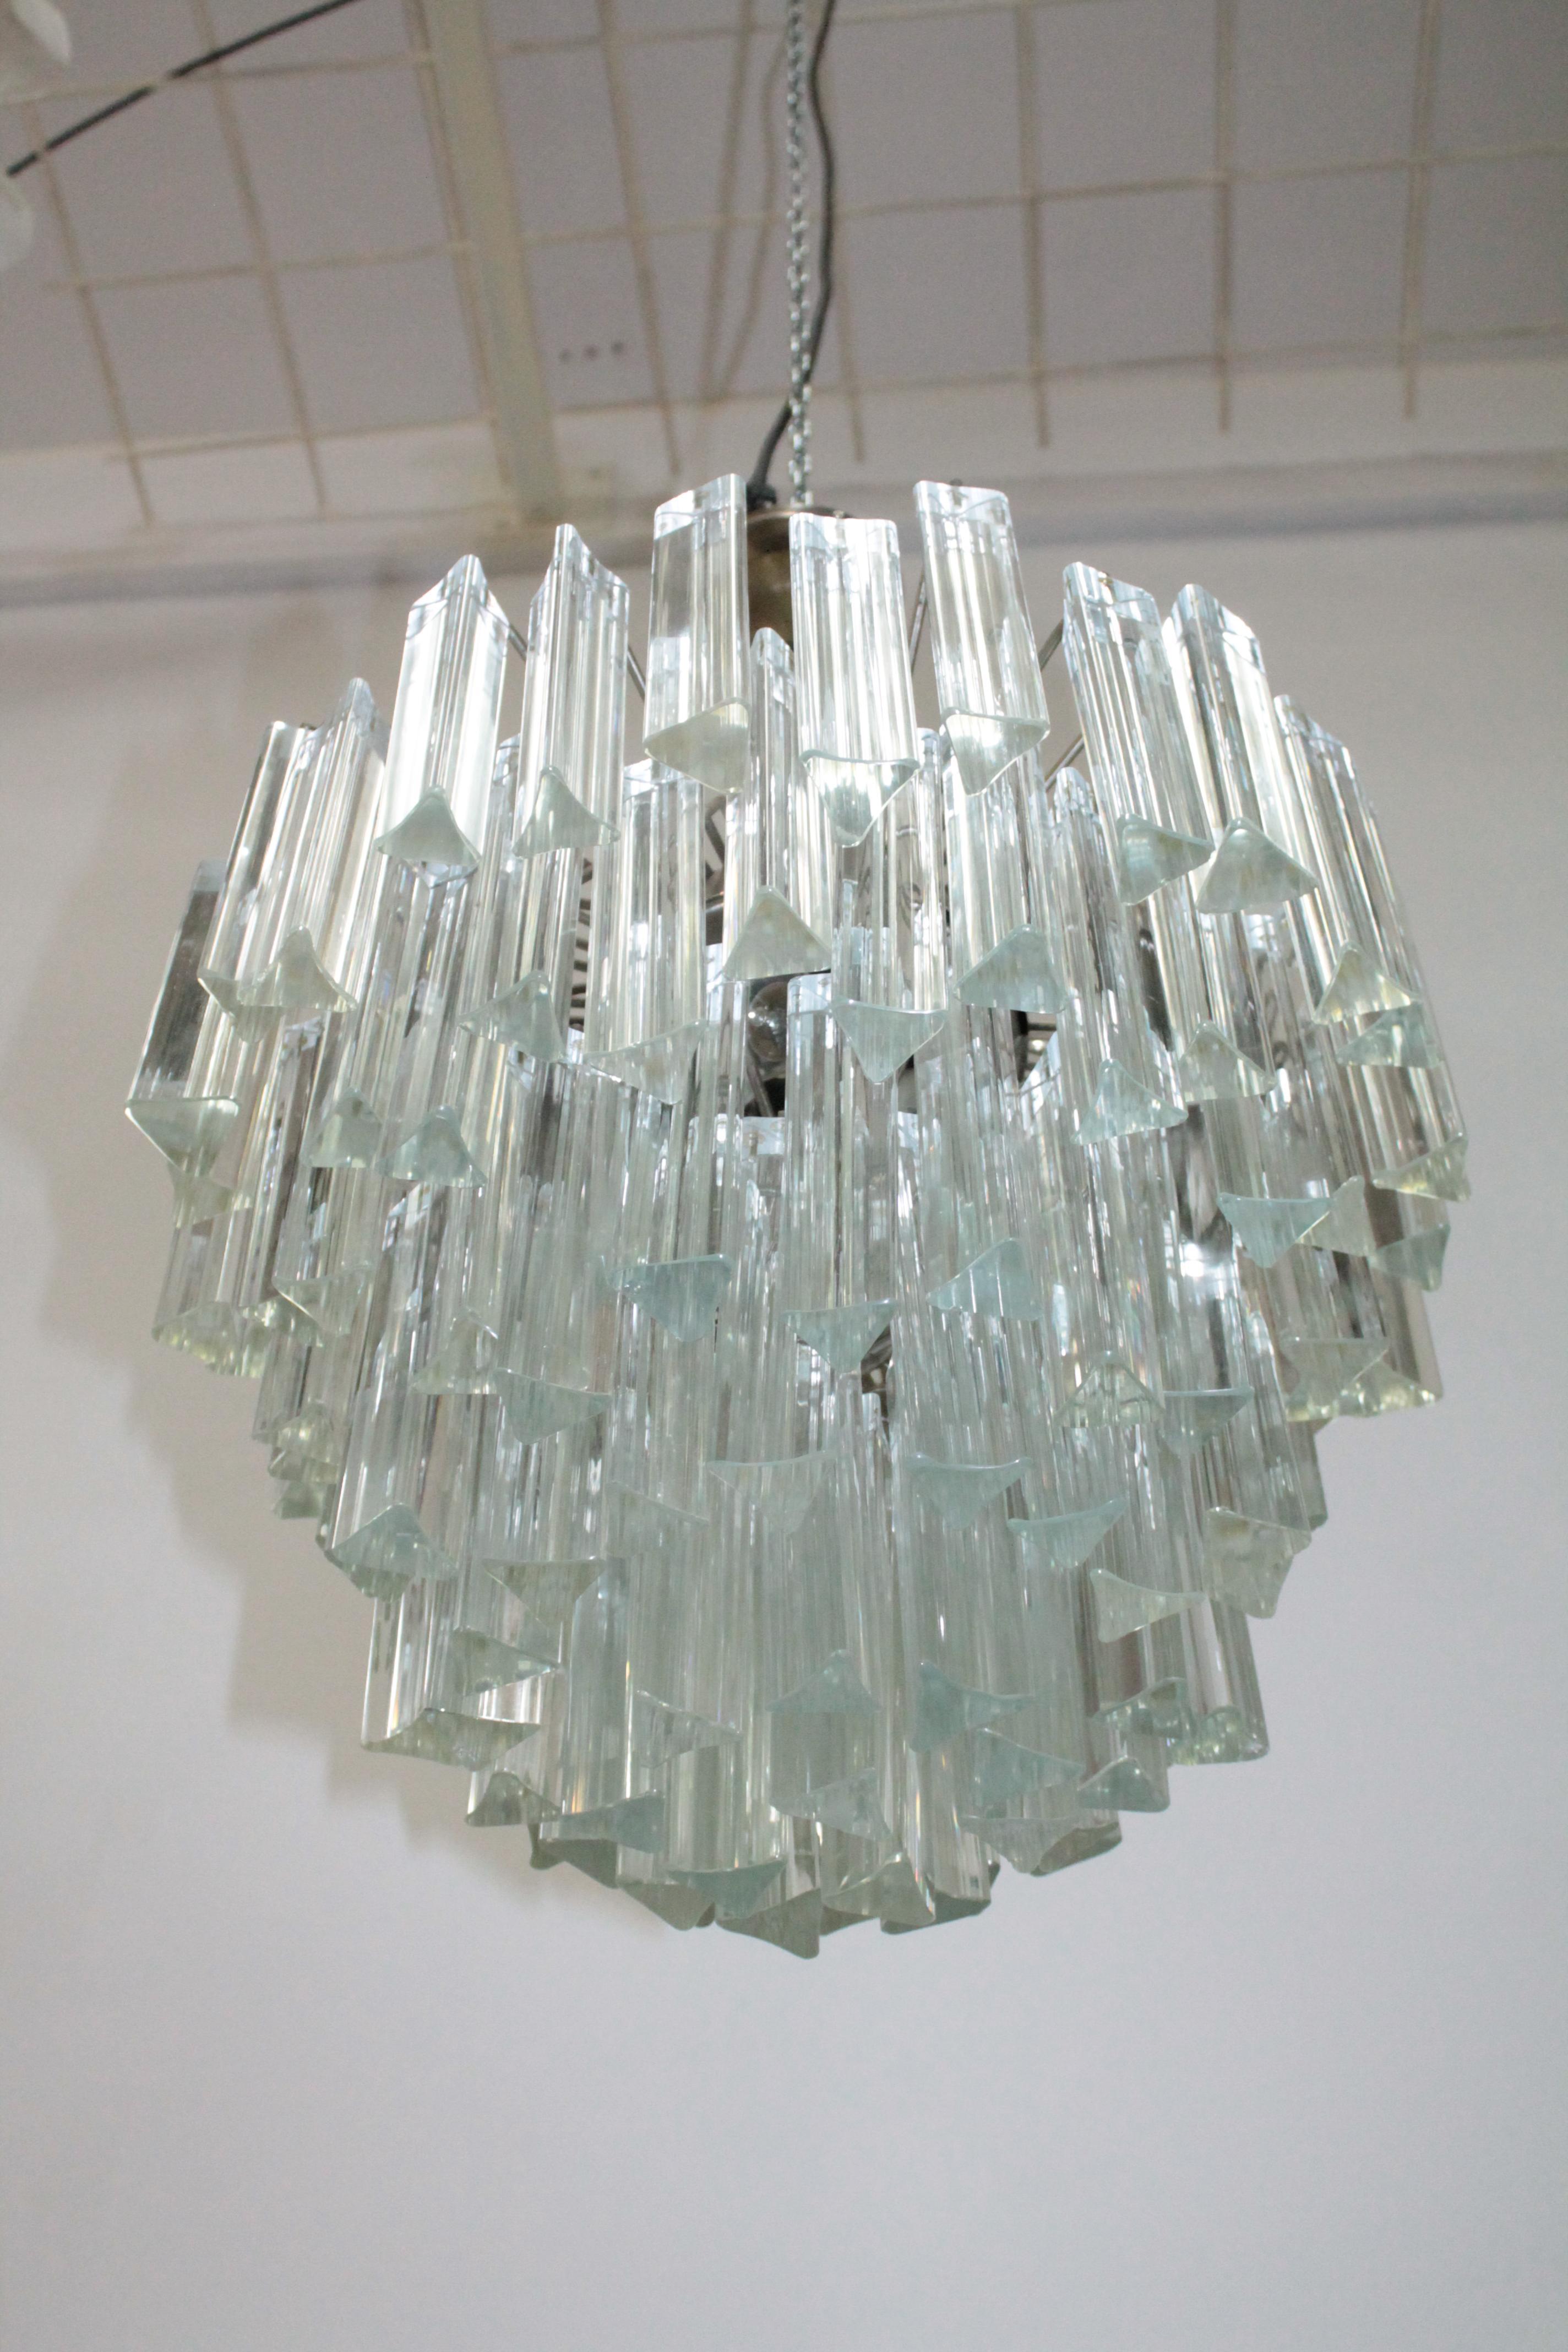 Original Murano chandelier by Venini, circa 1960.
trilobo design with 108 pieces of glass in perfect condition.